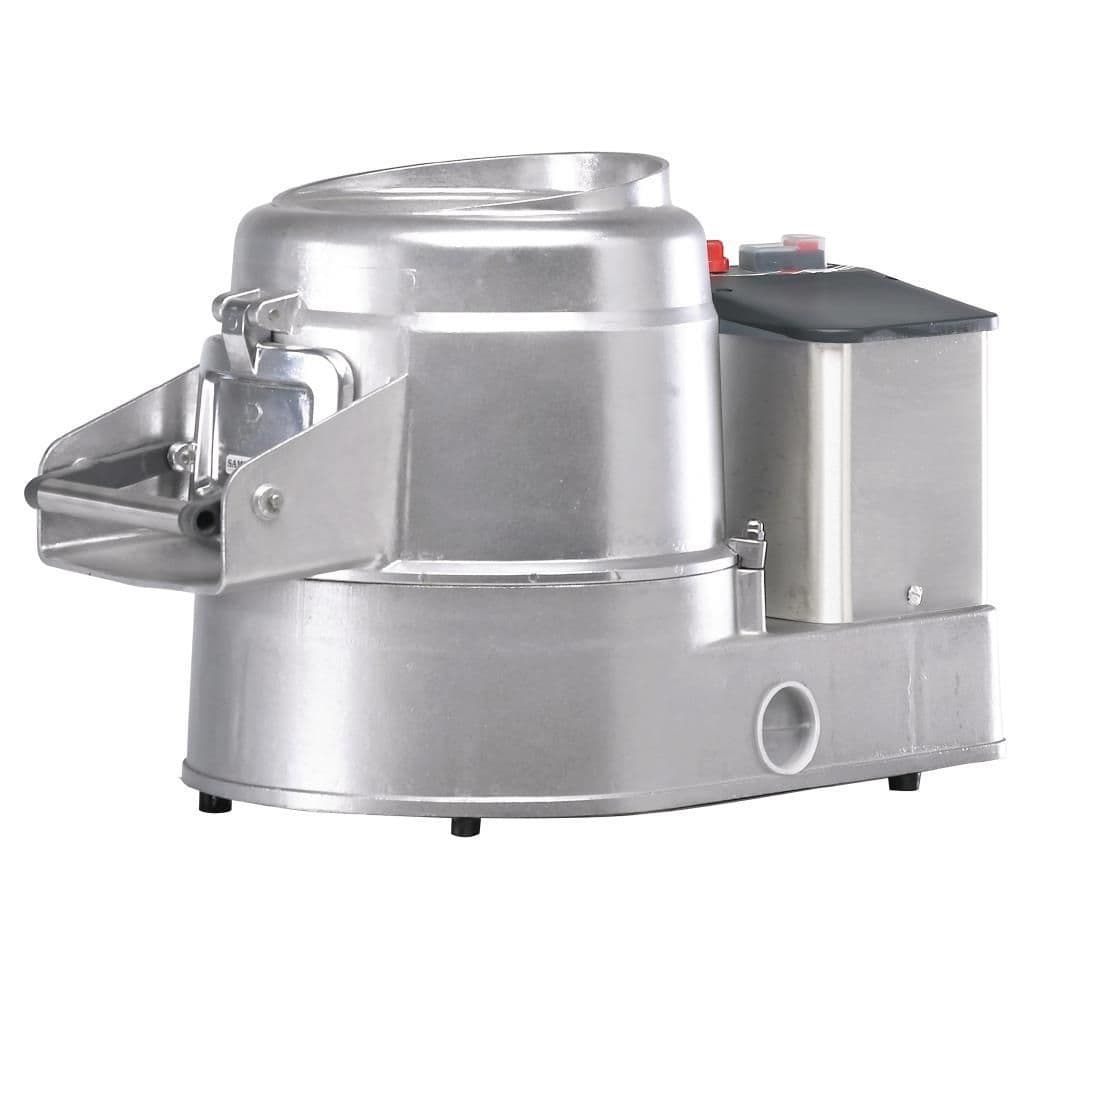 CP723-1P Sammic Potato Peeler PP6 1 Phase JD Catering Equipment Solutions Ltd